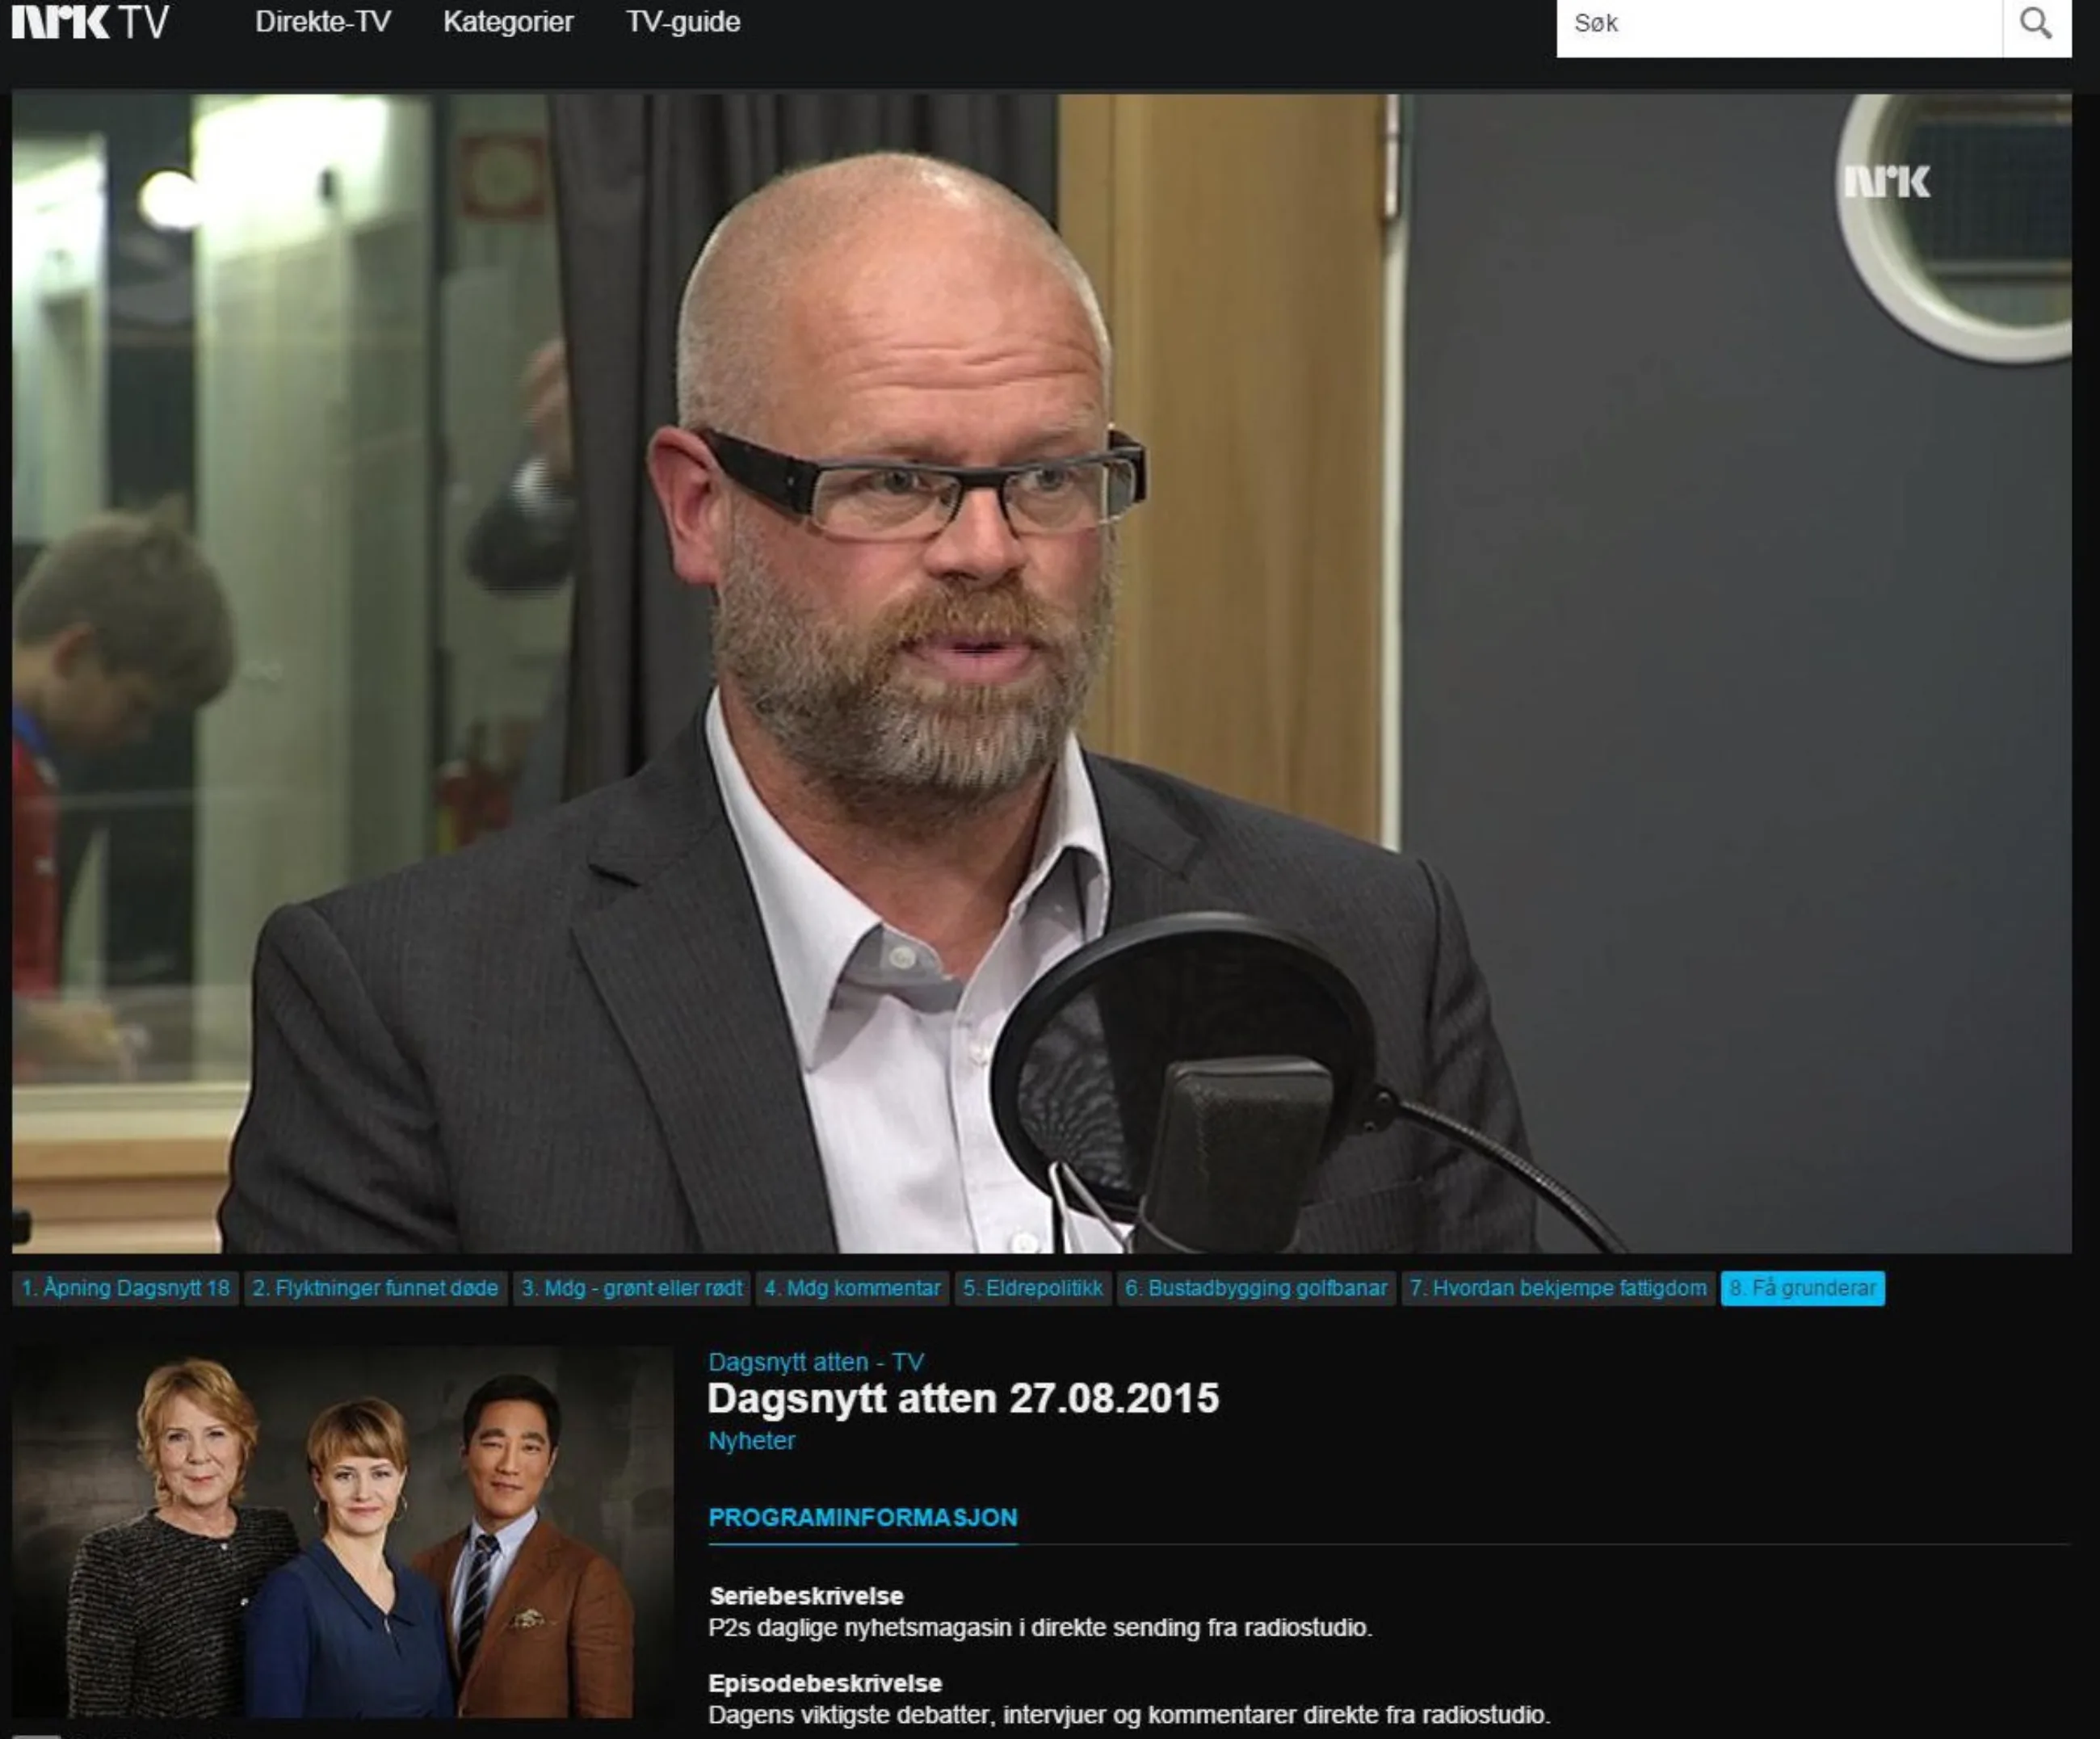 2015 08 27 NRK TV Dagsnytt atten crop